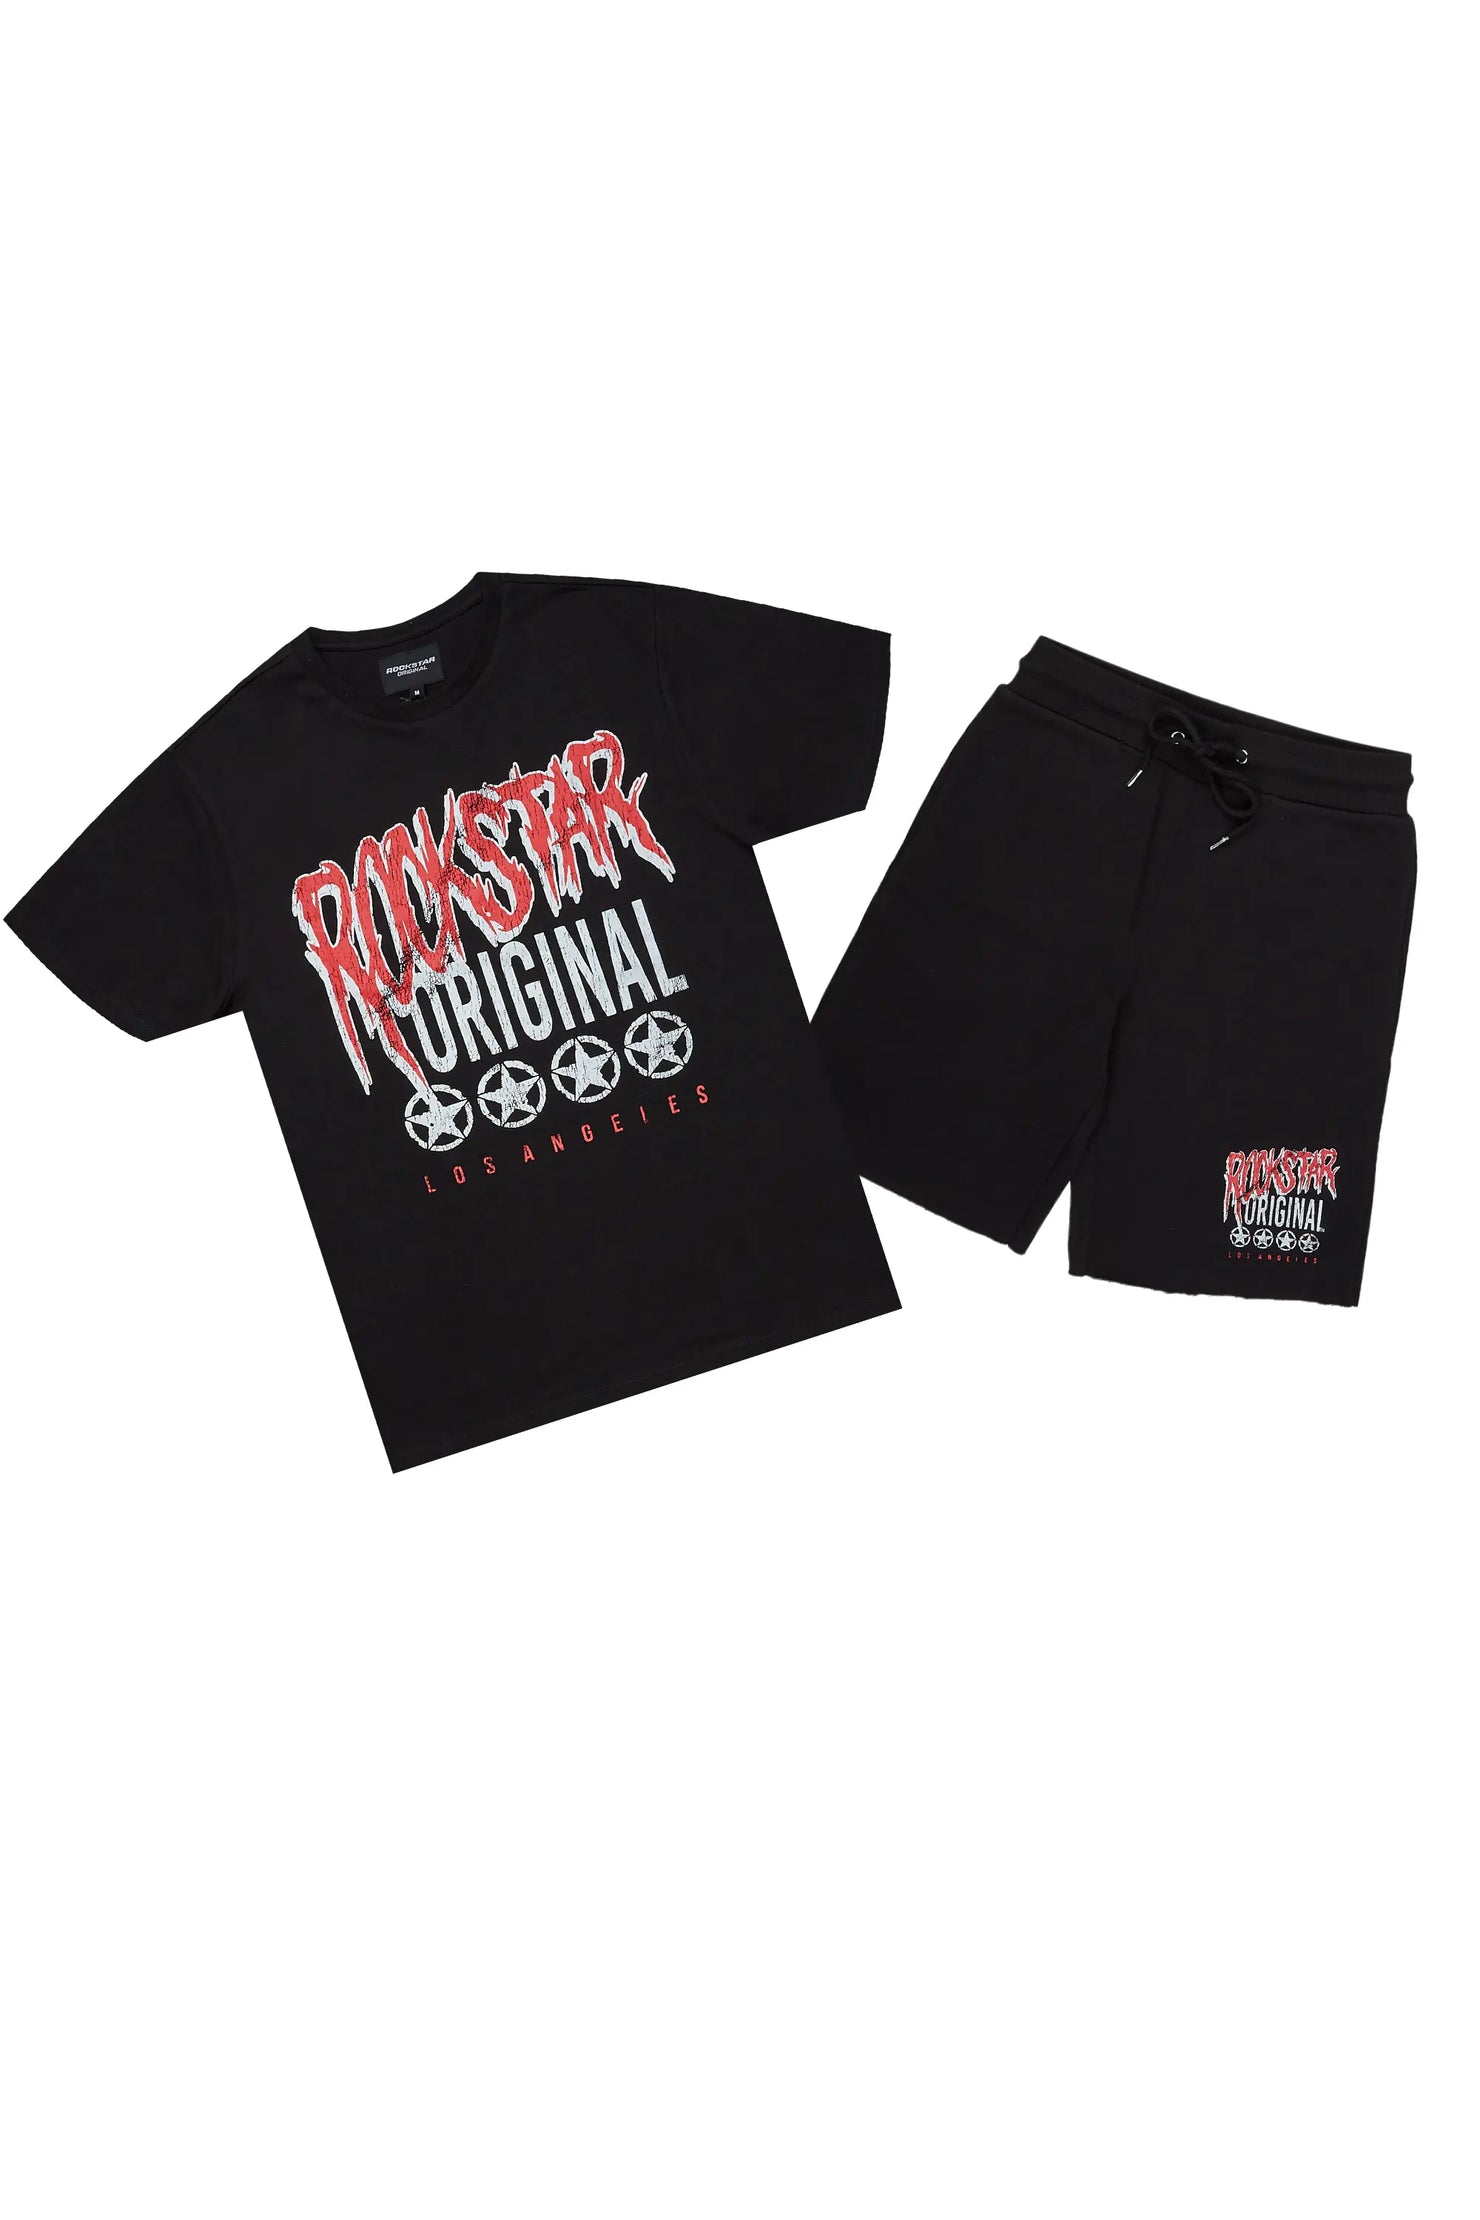 Wizzurd Black T-Shirt/Short Set